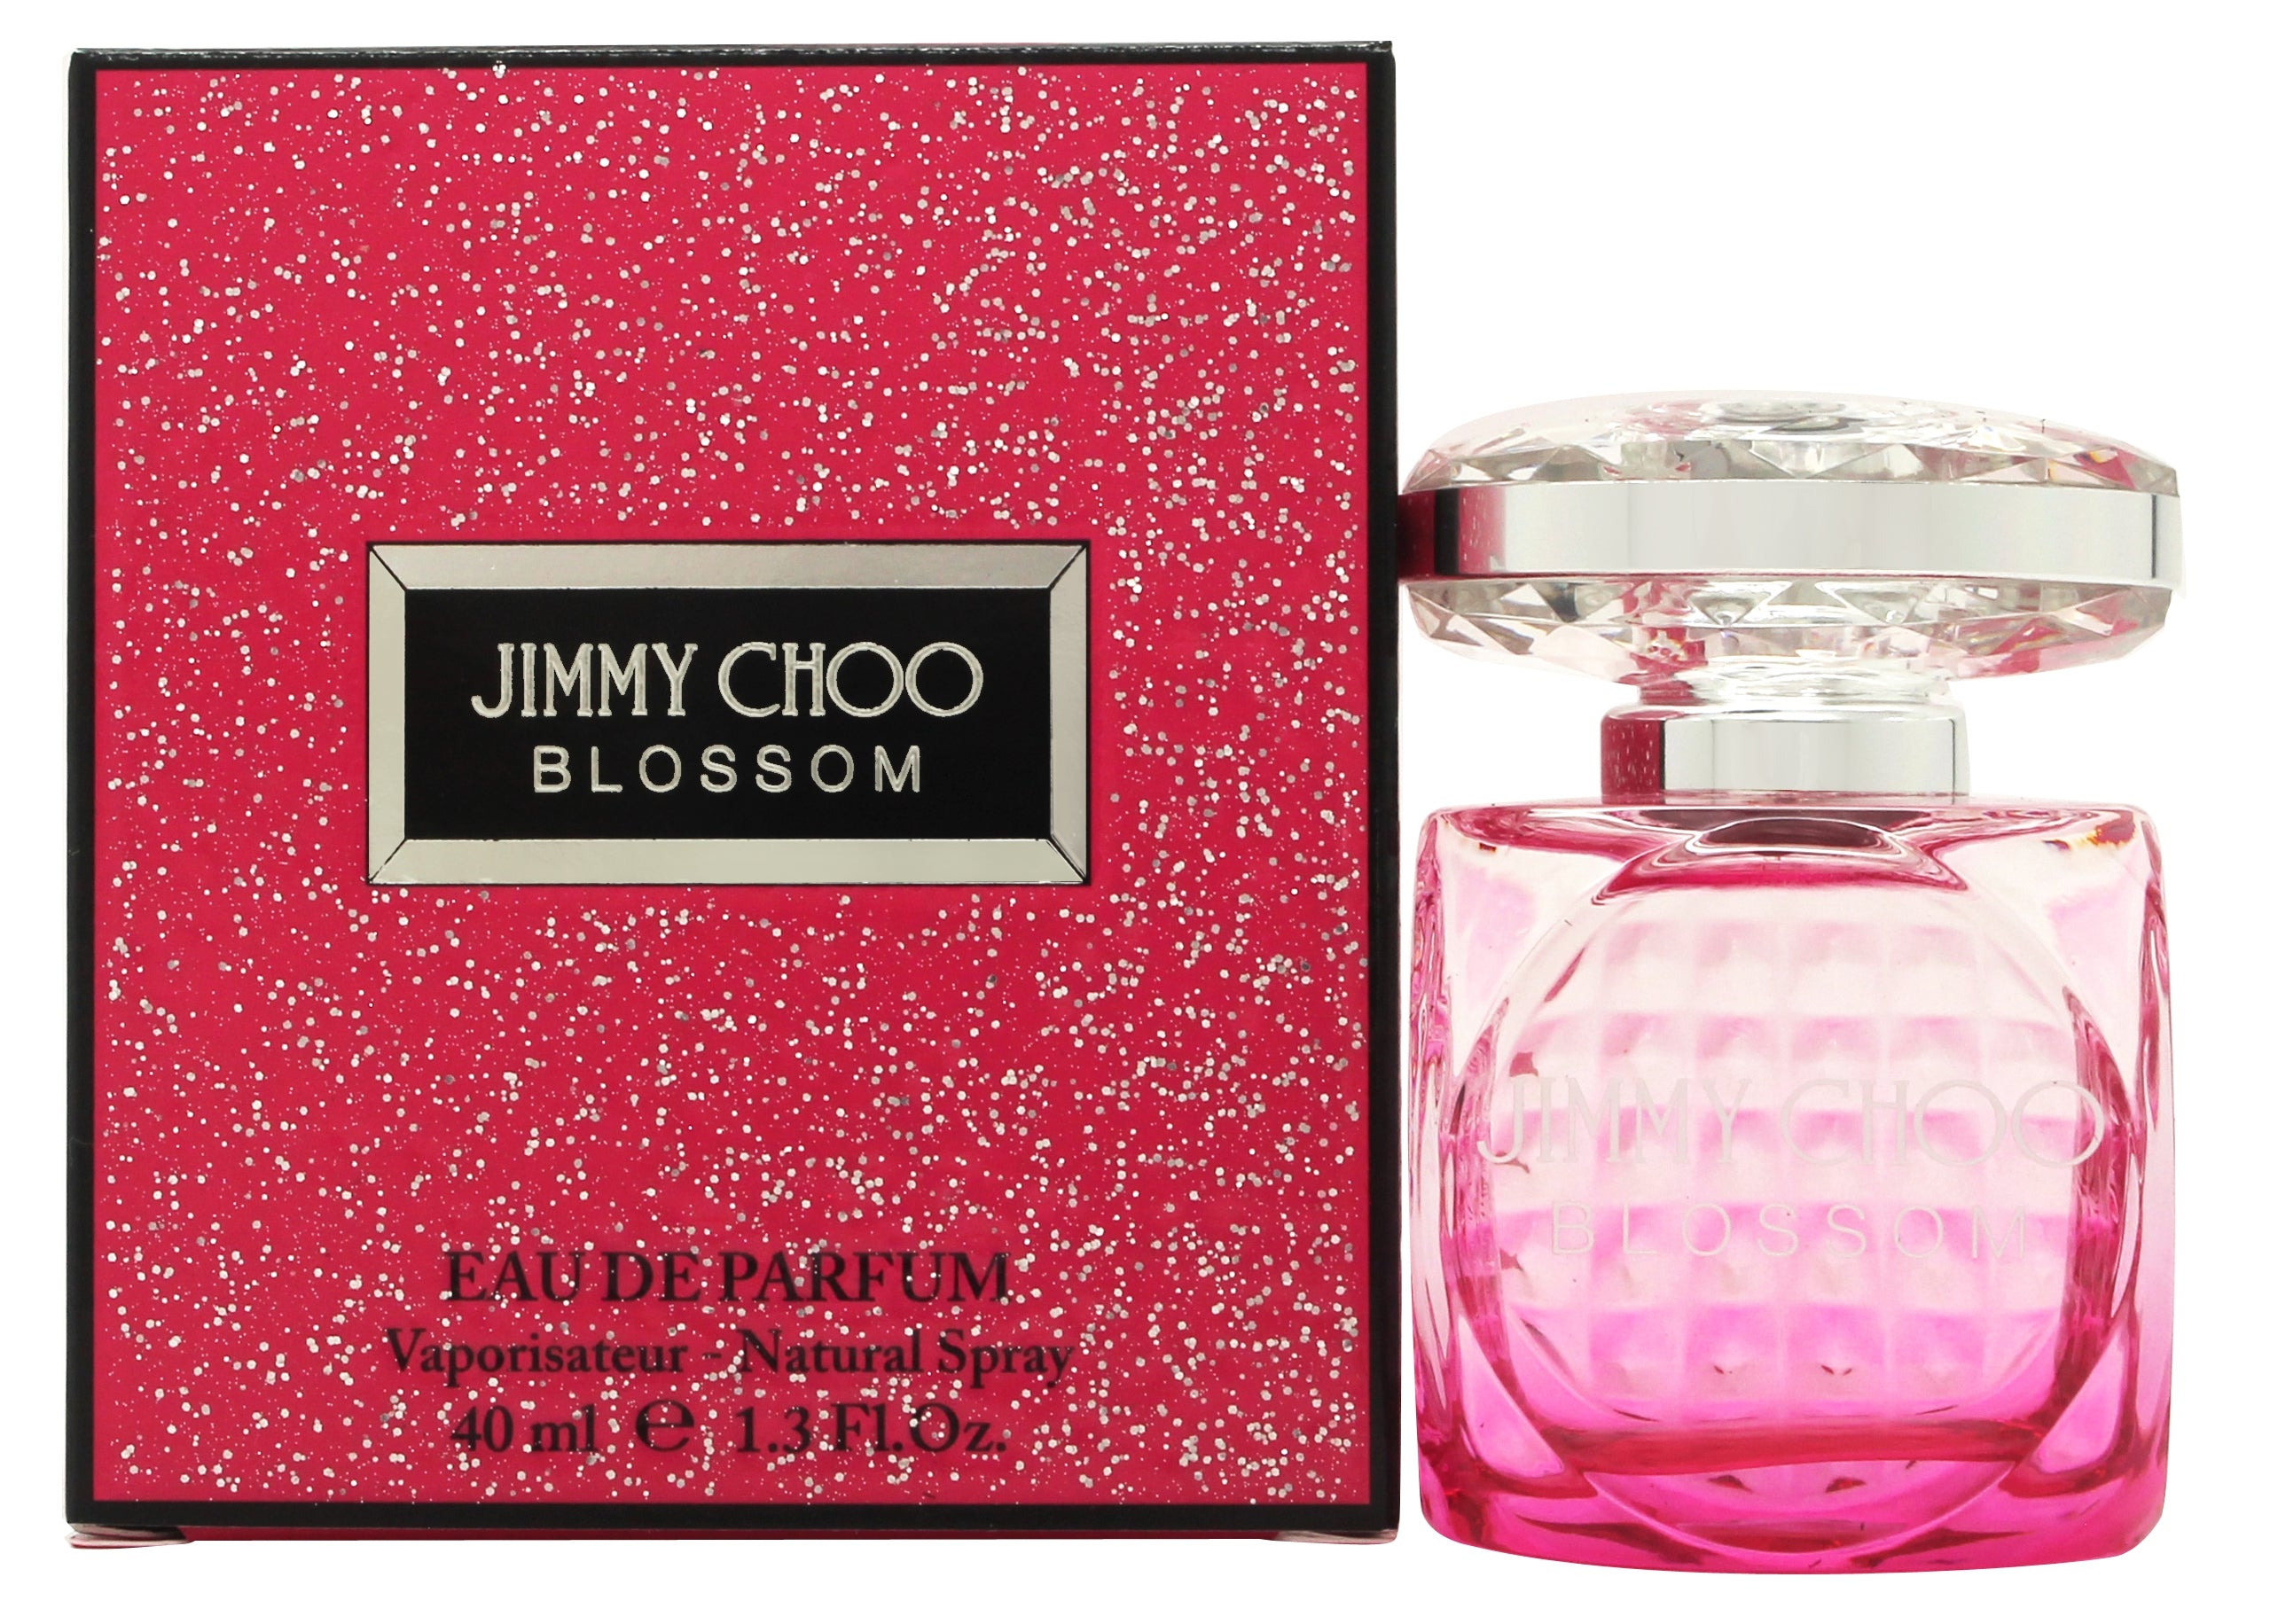 View Jimmy Choo Blossom Eau de Parfum 40ml Spray information